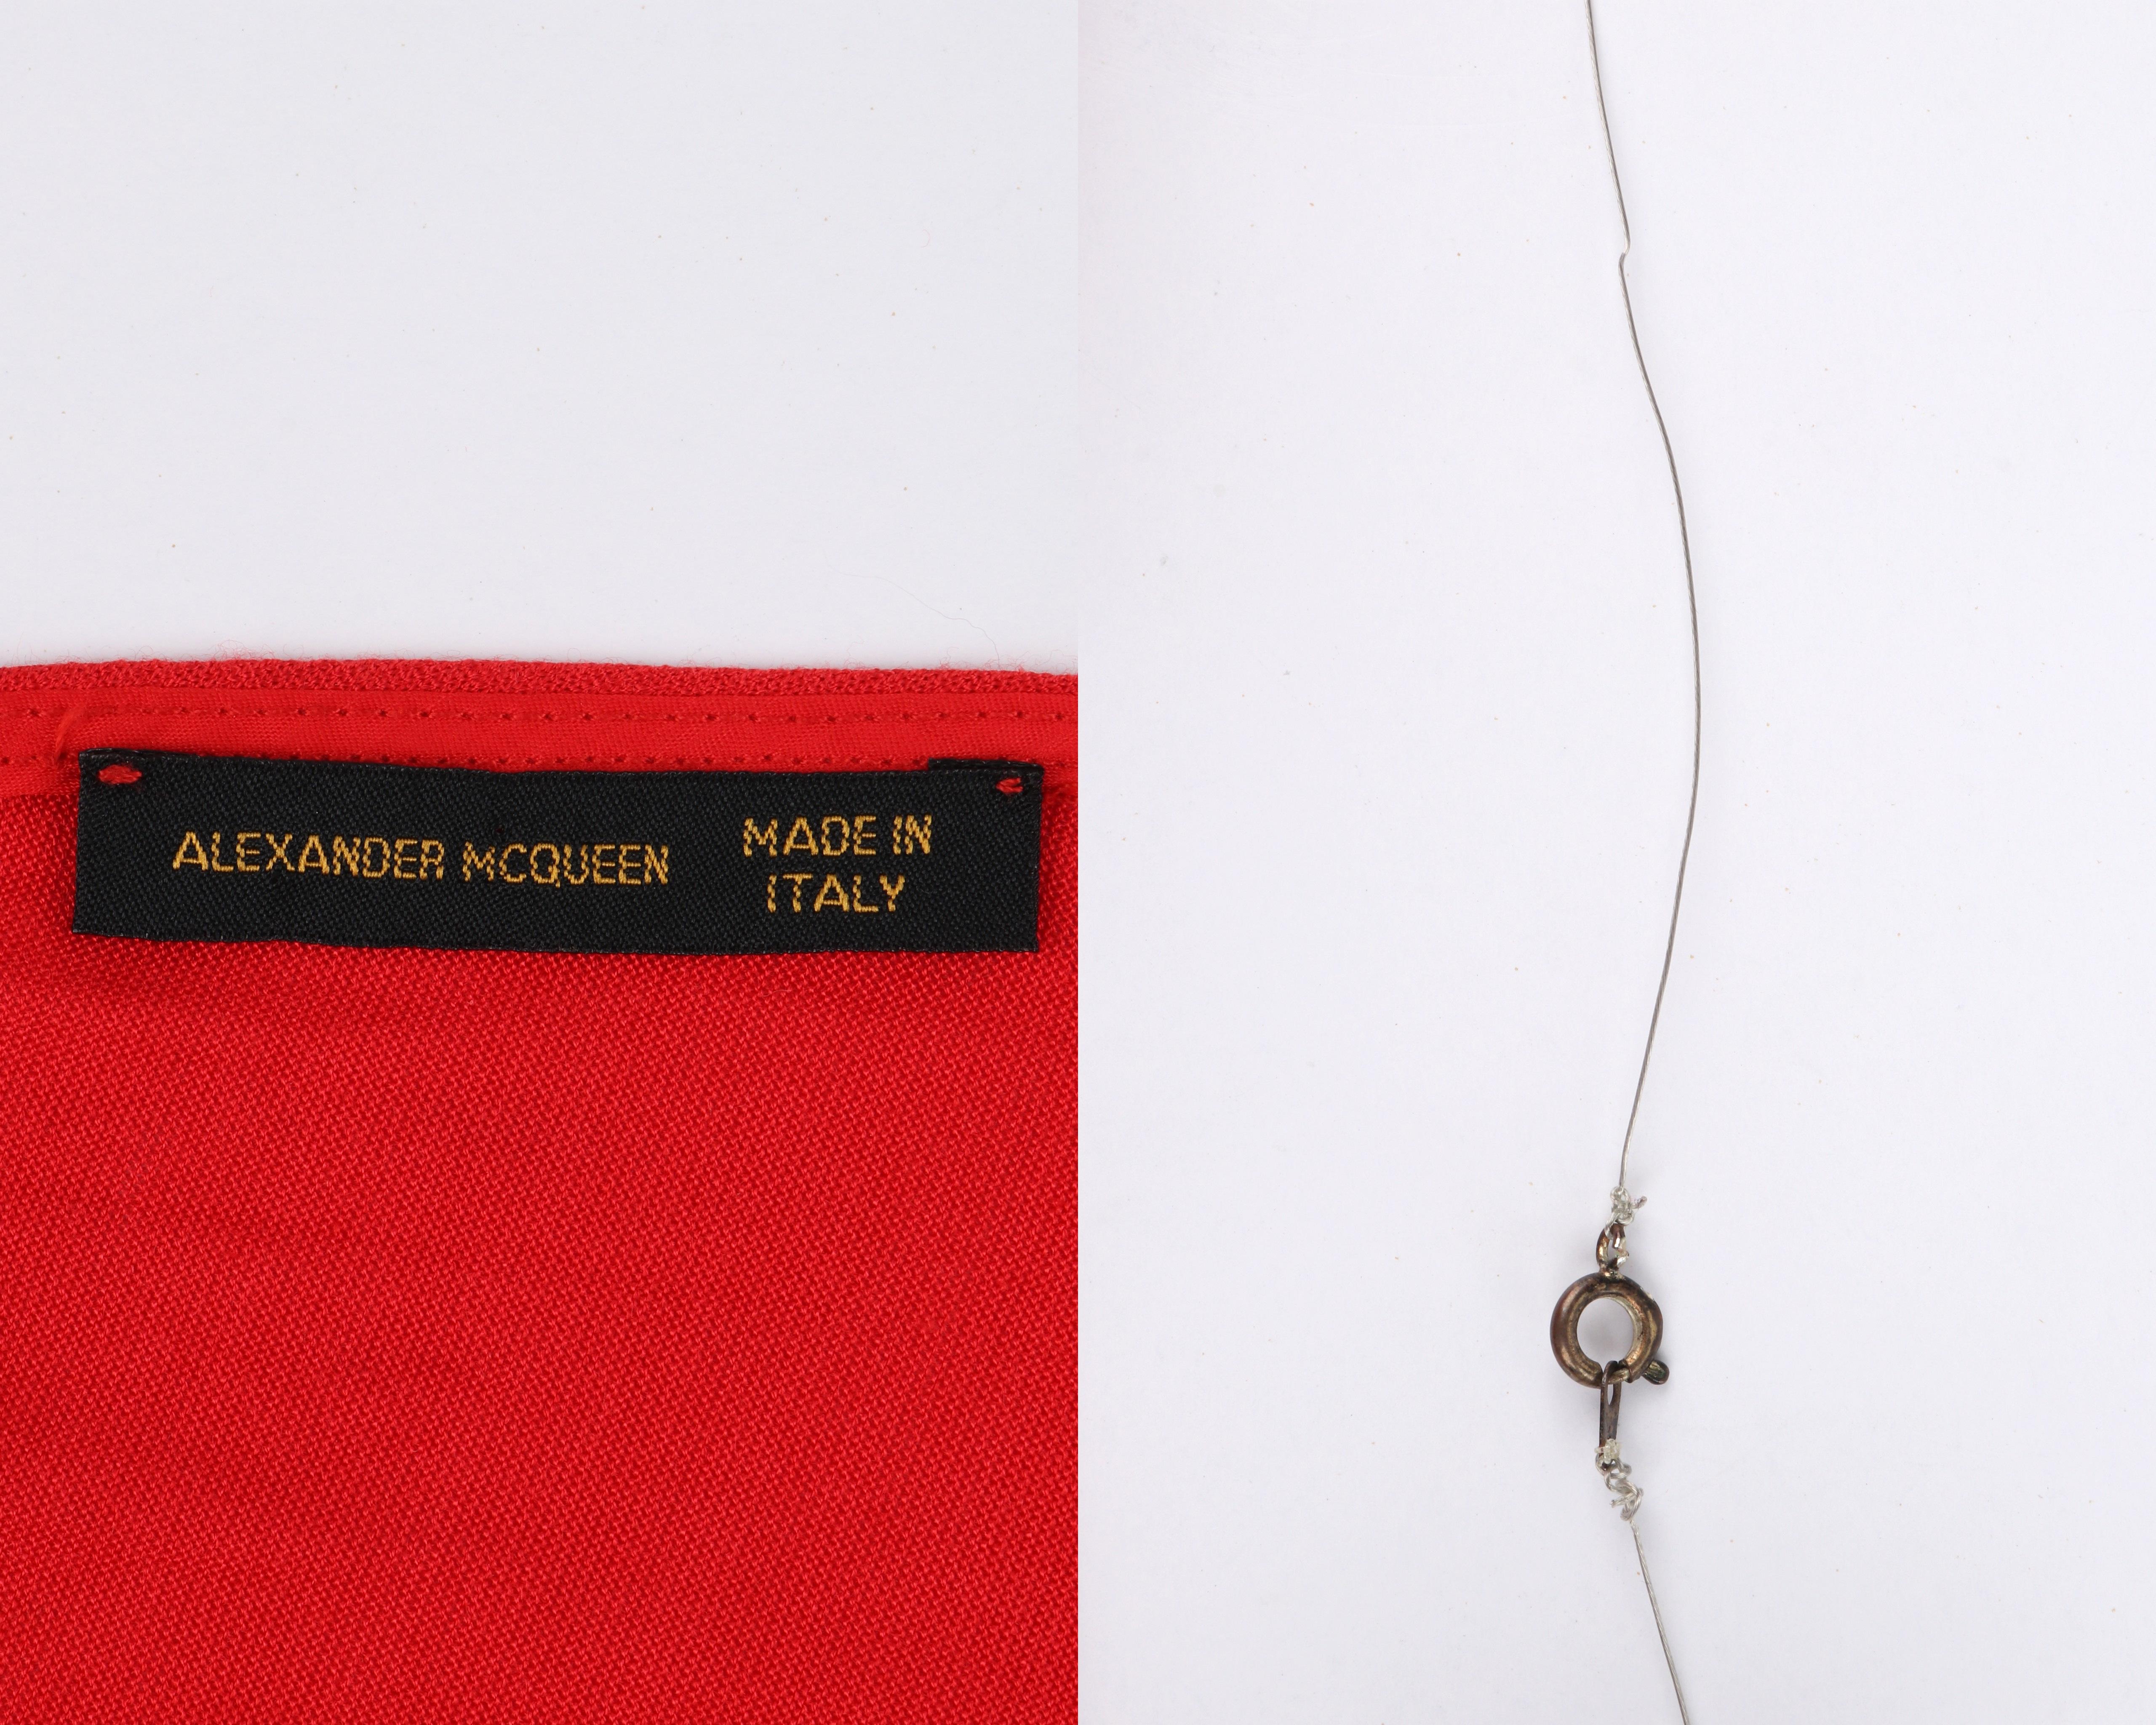 ALEXANDER McQUEEN S/S 2001 “Eye” Red Keyhole Cutout Wire Choker Halter Top Dress For Sale 3